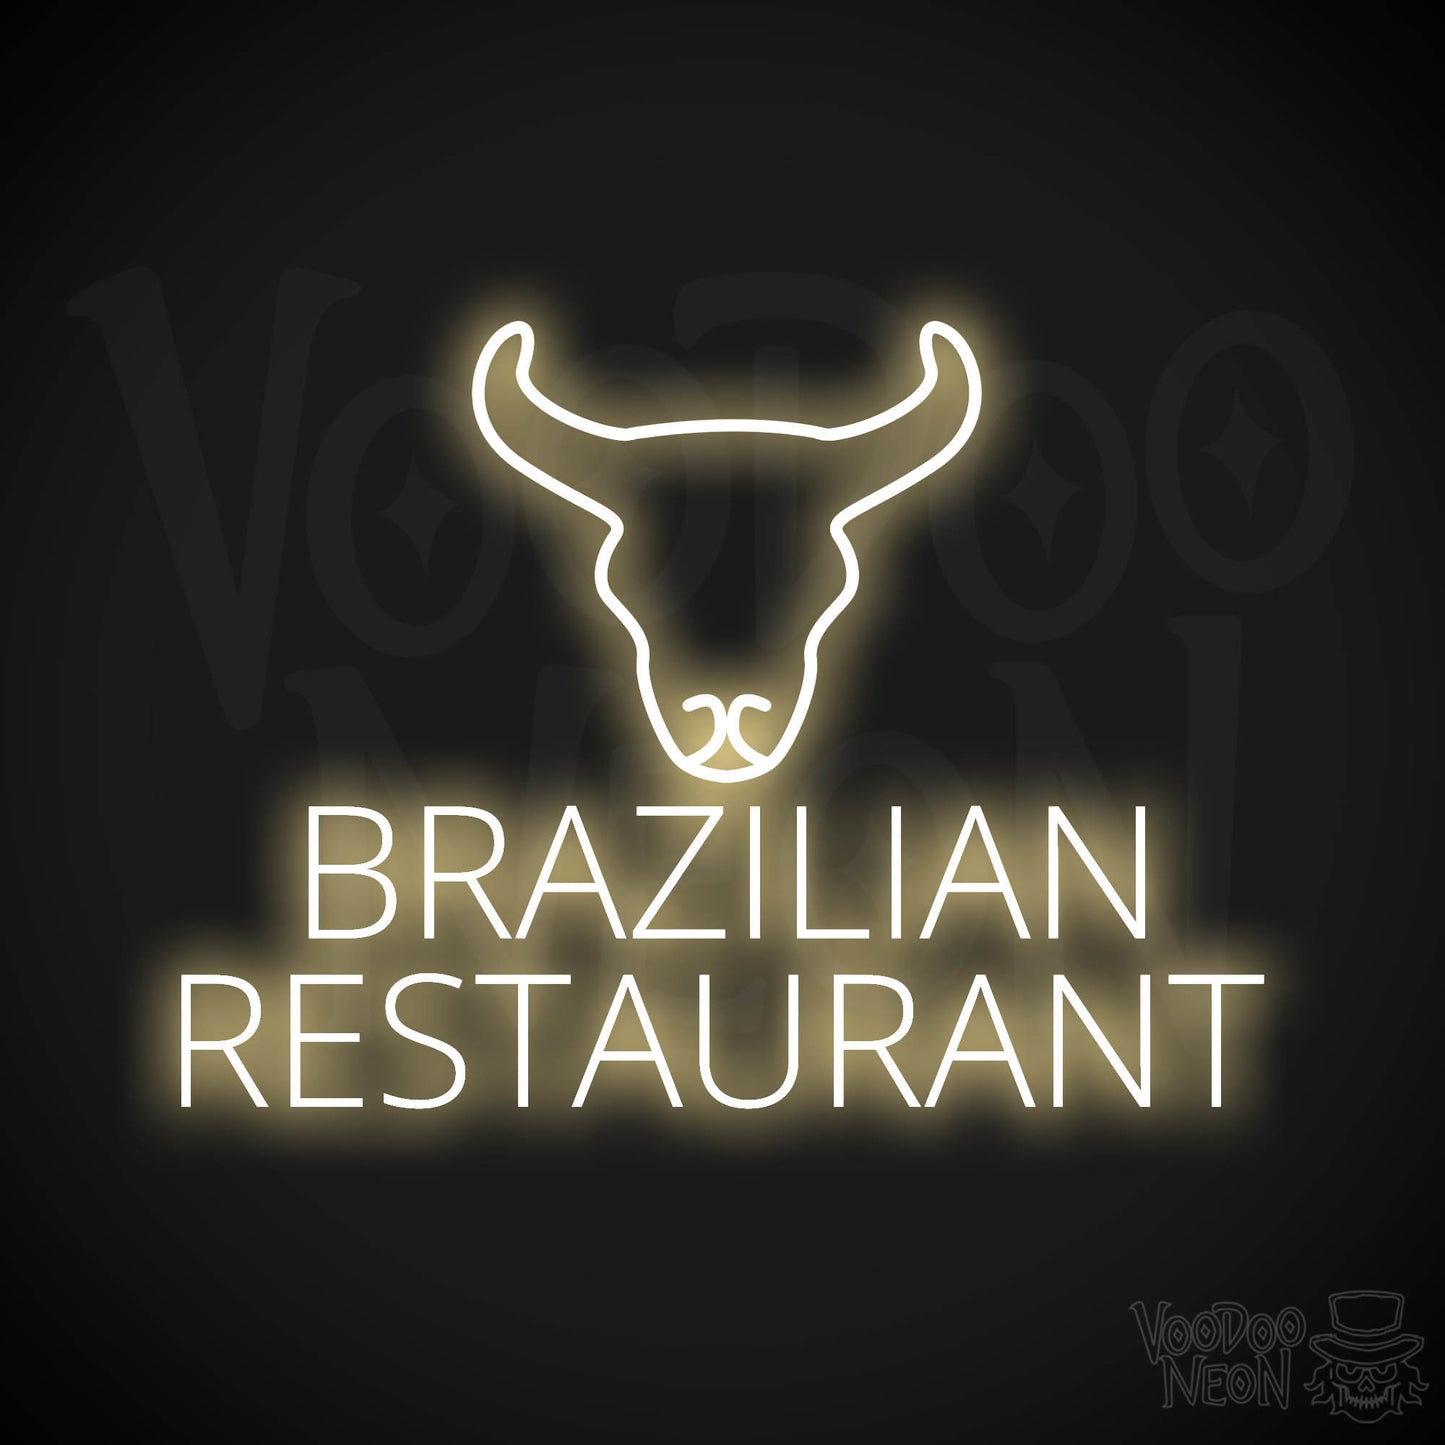 Brazilian Restaurant LED Neon - Warm White